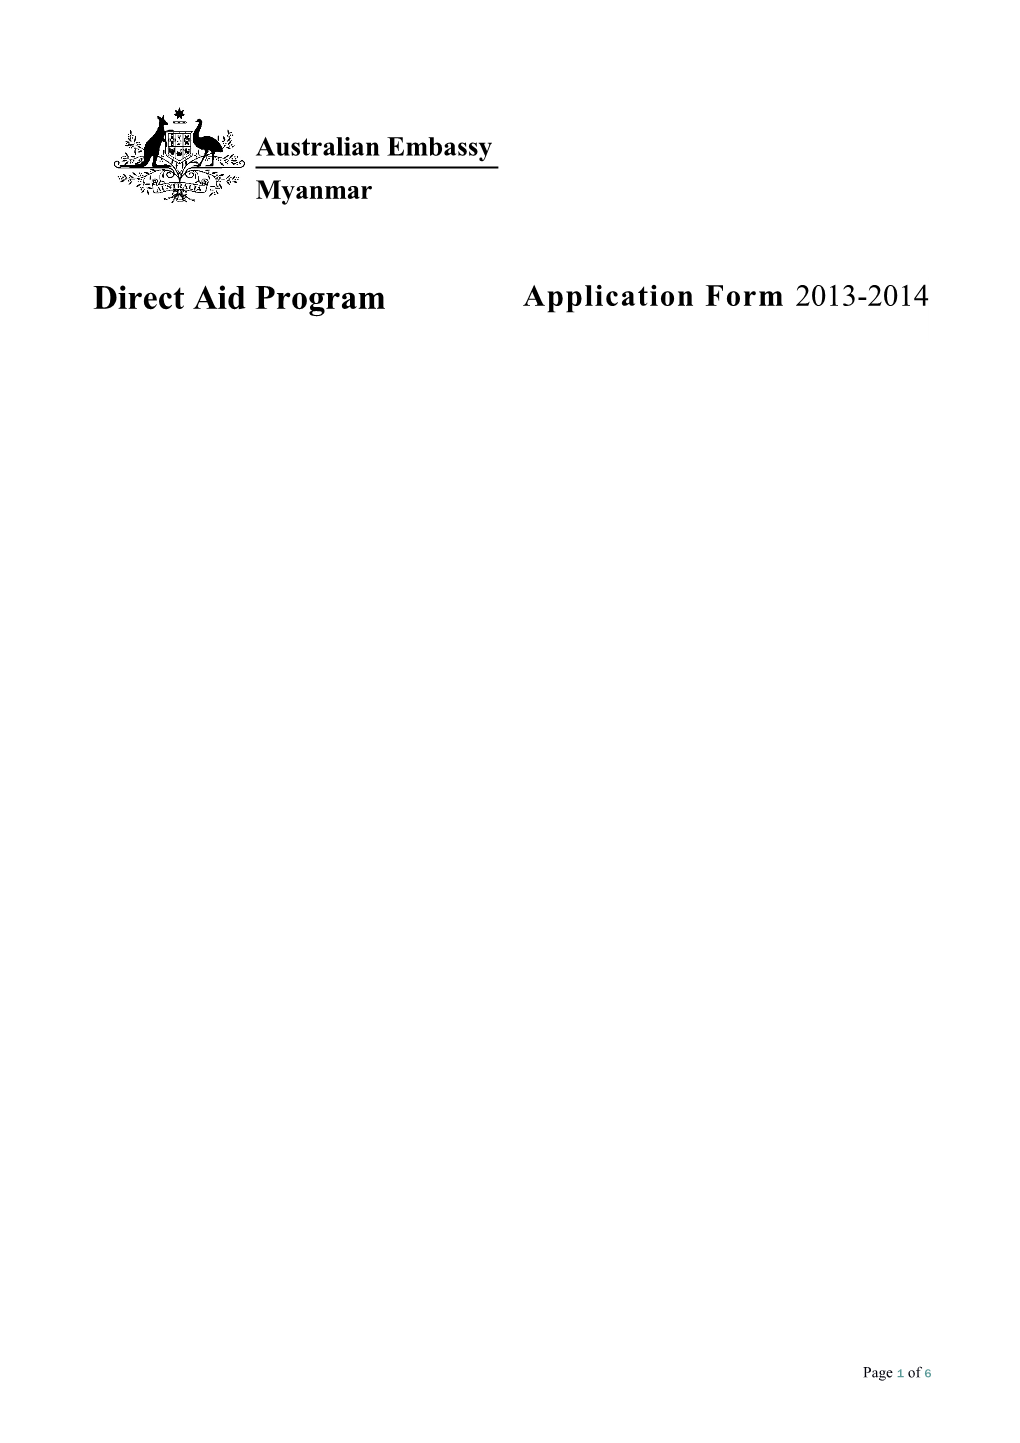 Australian Embassy Direct Aid Program Application